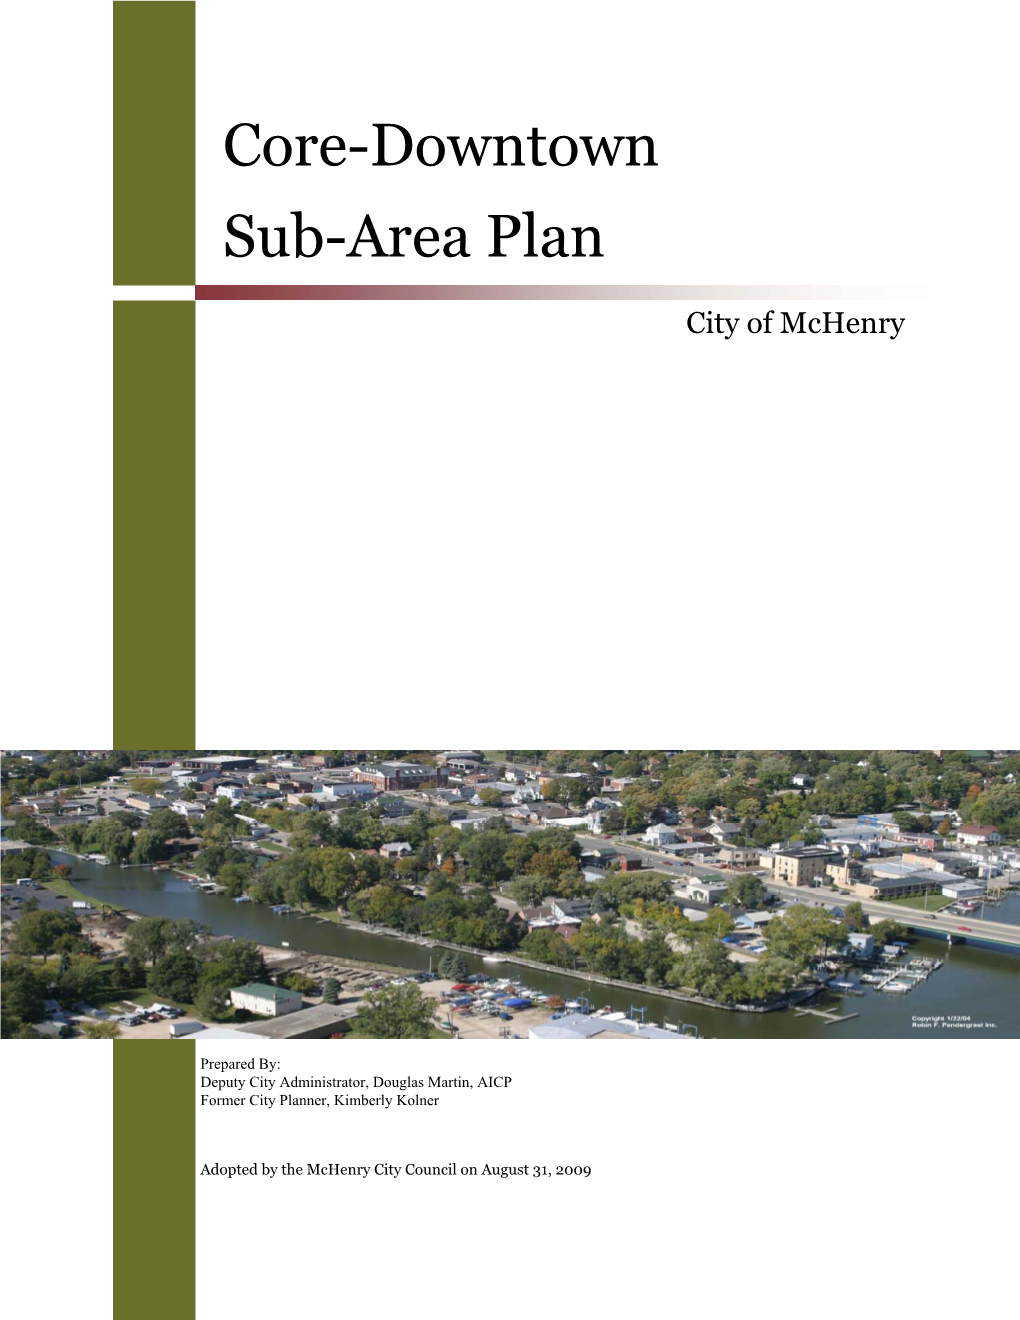 Core-Downtown Sub-Area Plan